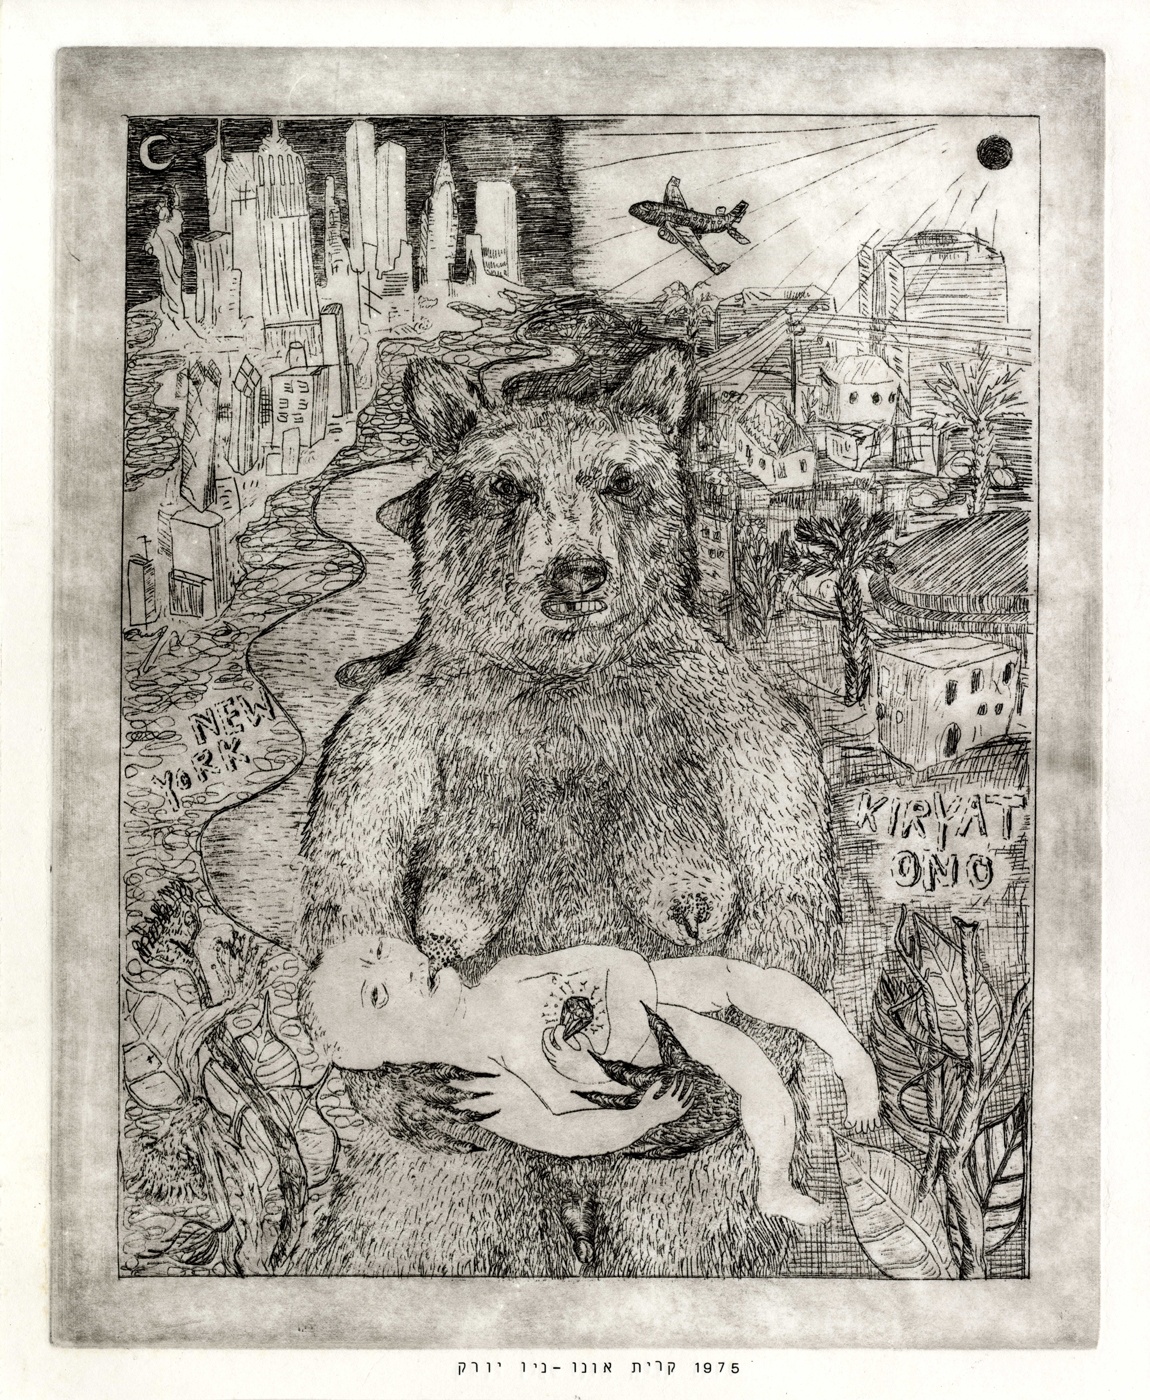 Kiryat ono- New york, etching, 20X25 cm, 2015